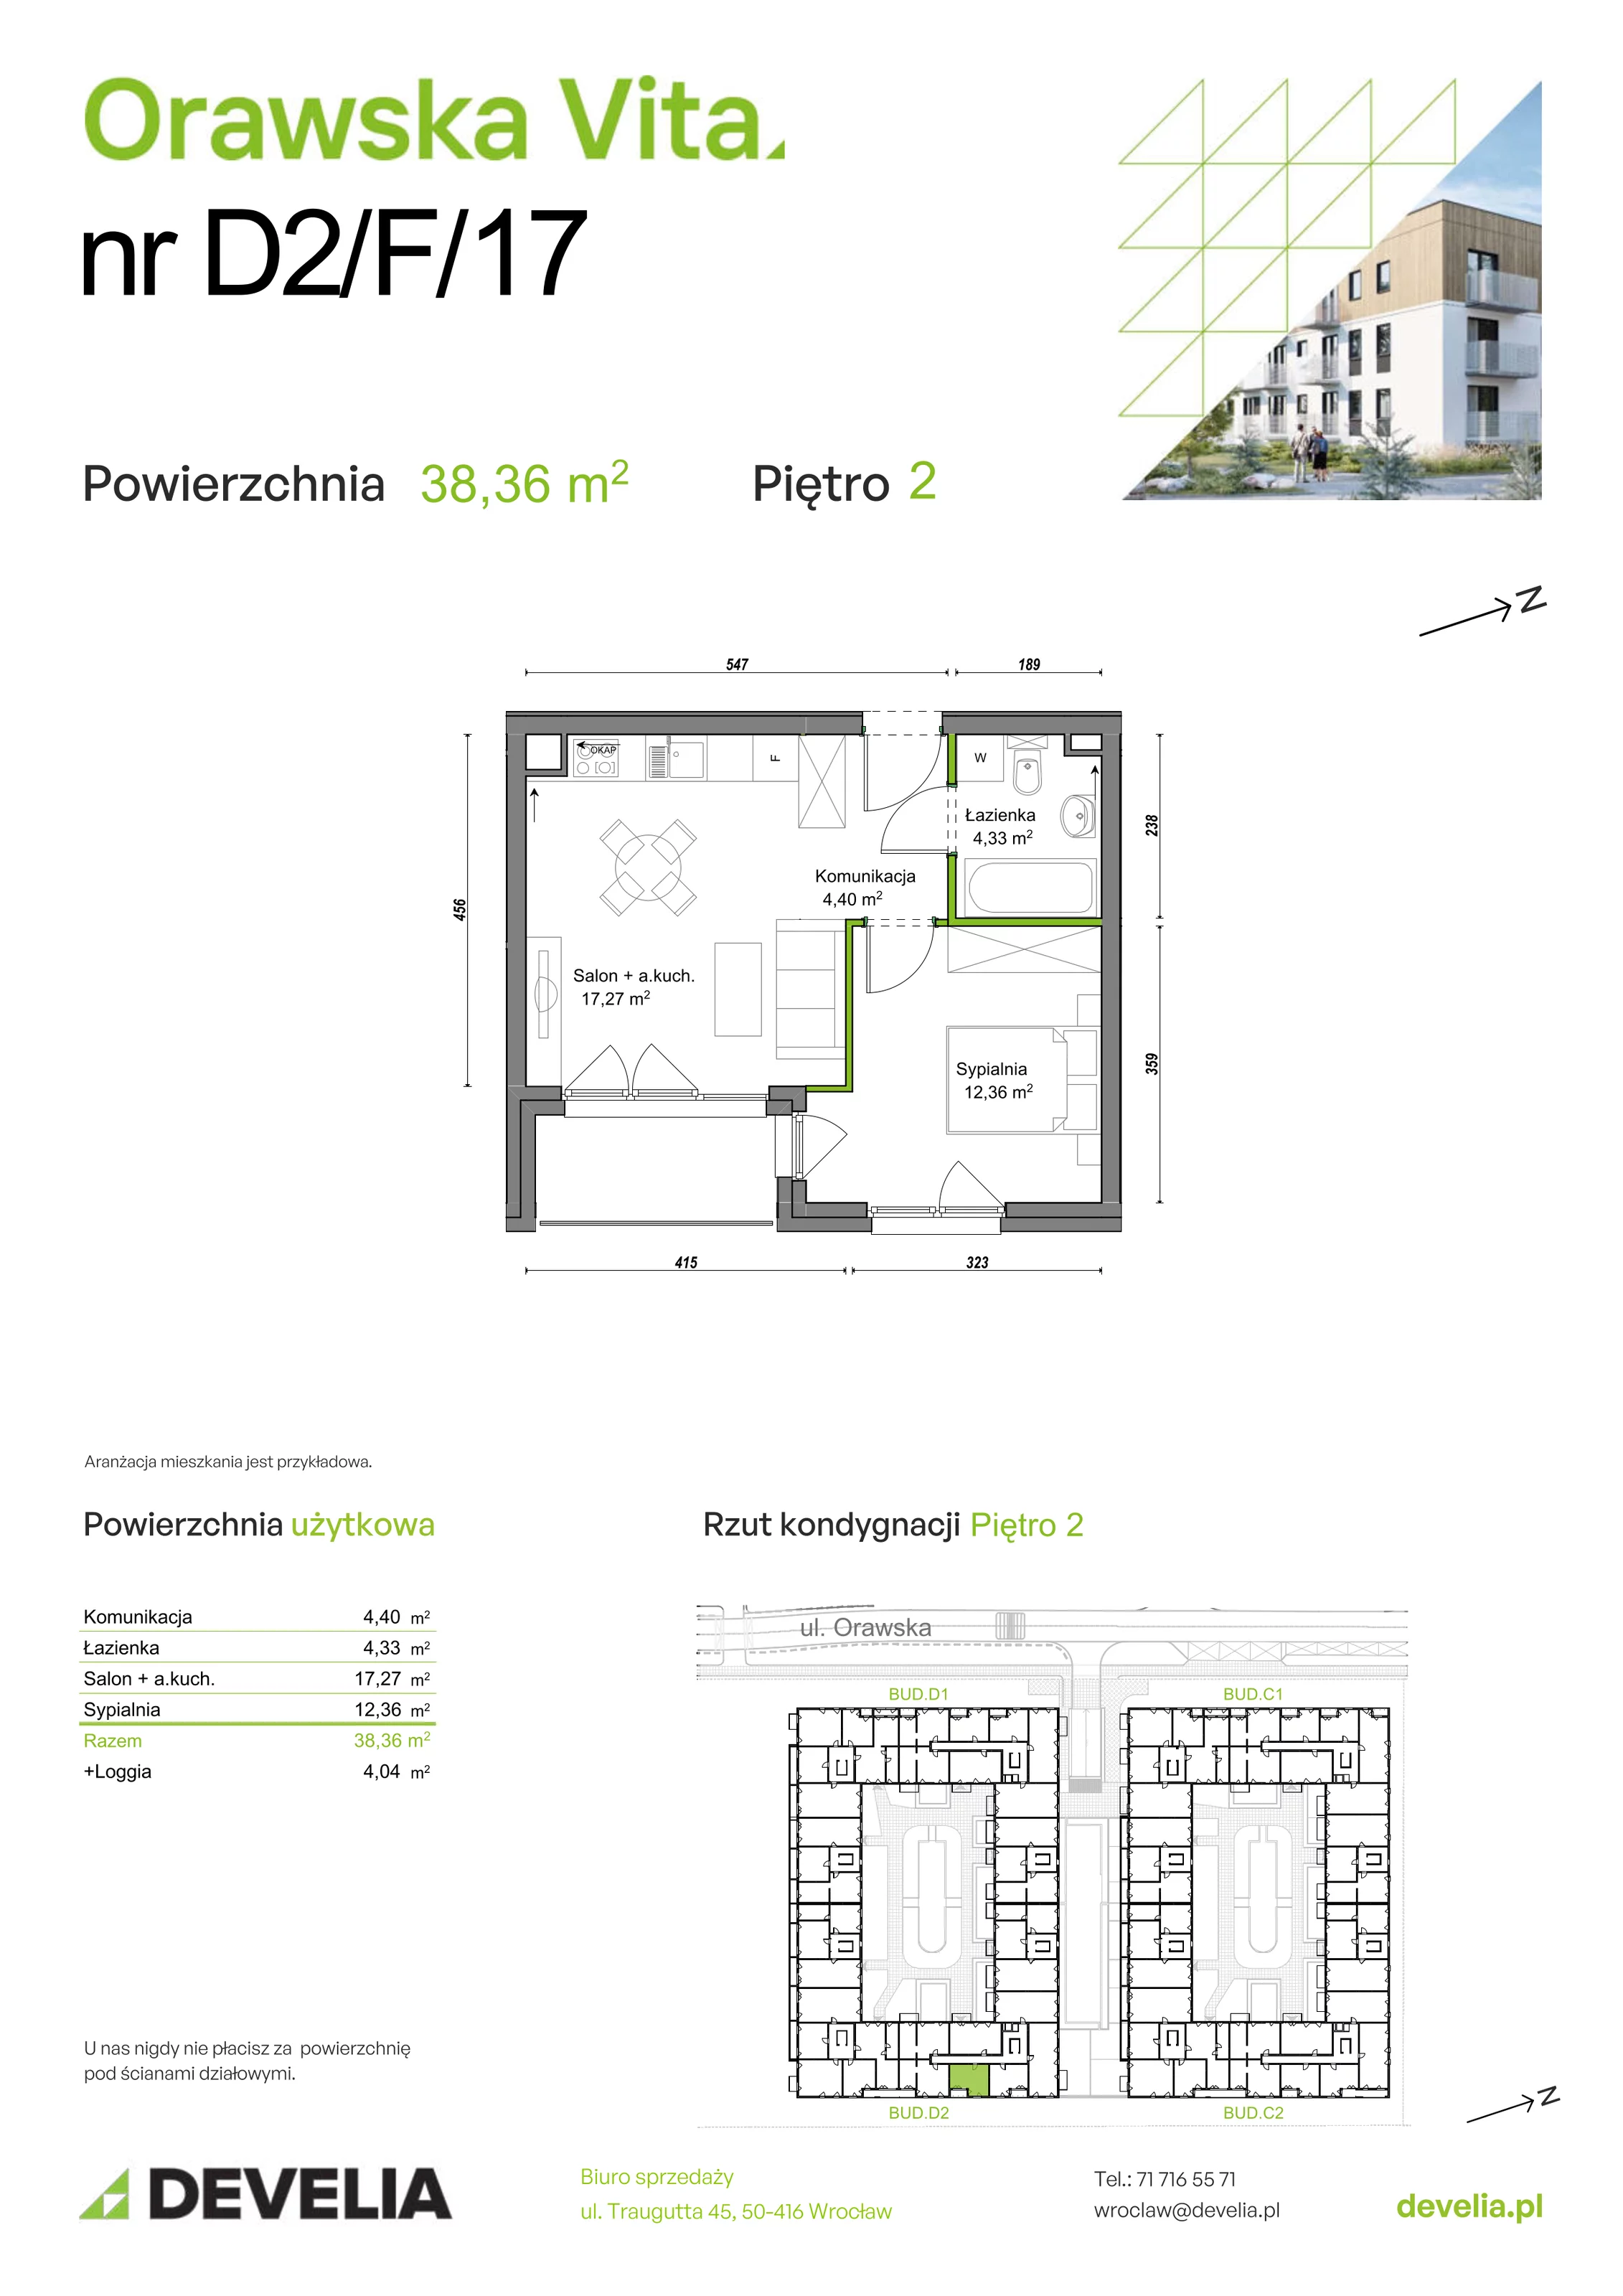 Mieszkanie 38,36 m², piętro 2, oferta nr D2/F/17, Orawska Vita, Wrocław, Ołtaszyn, Krzyki, ul. Orawska 73